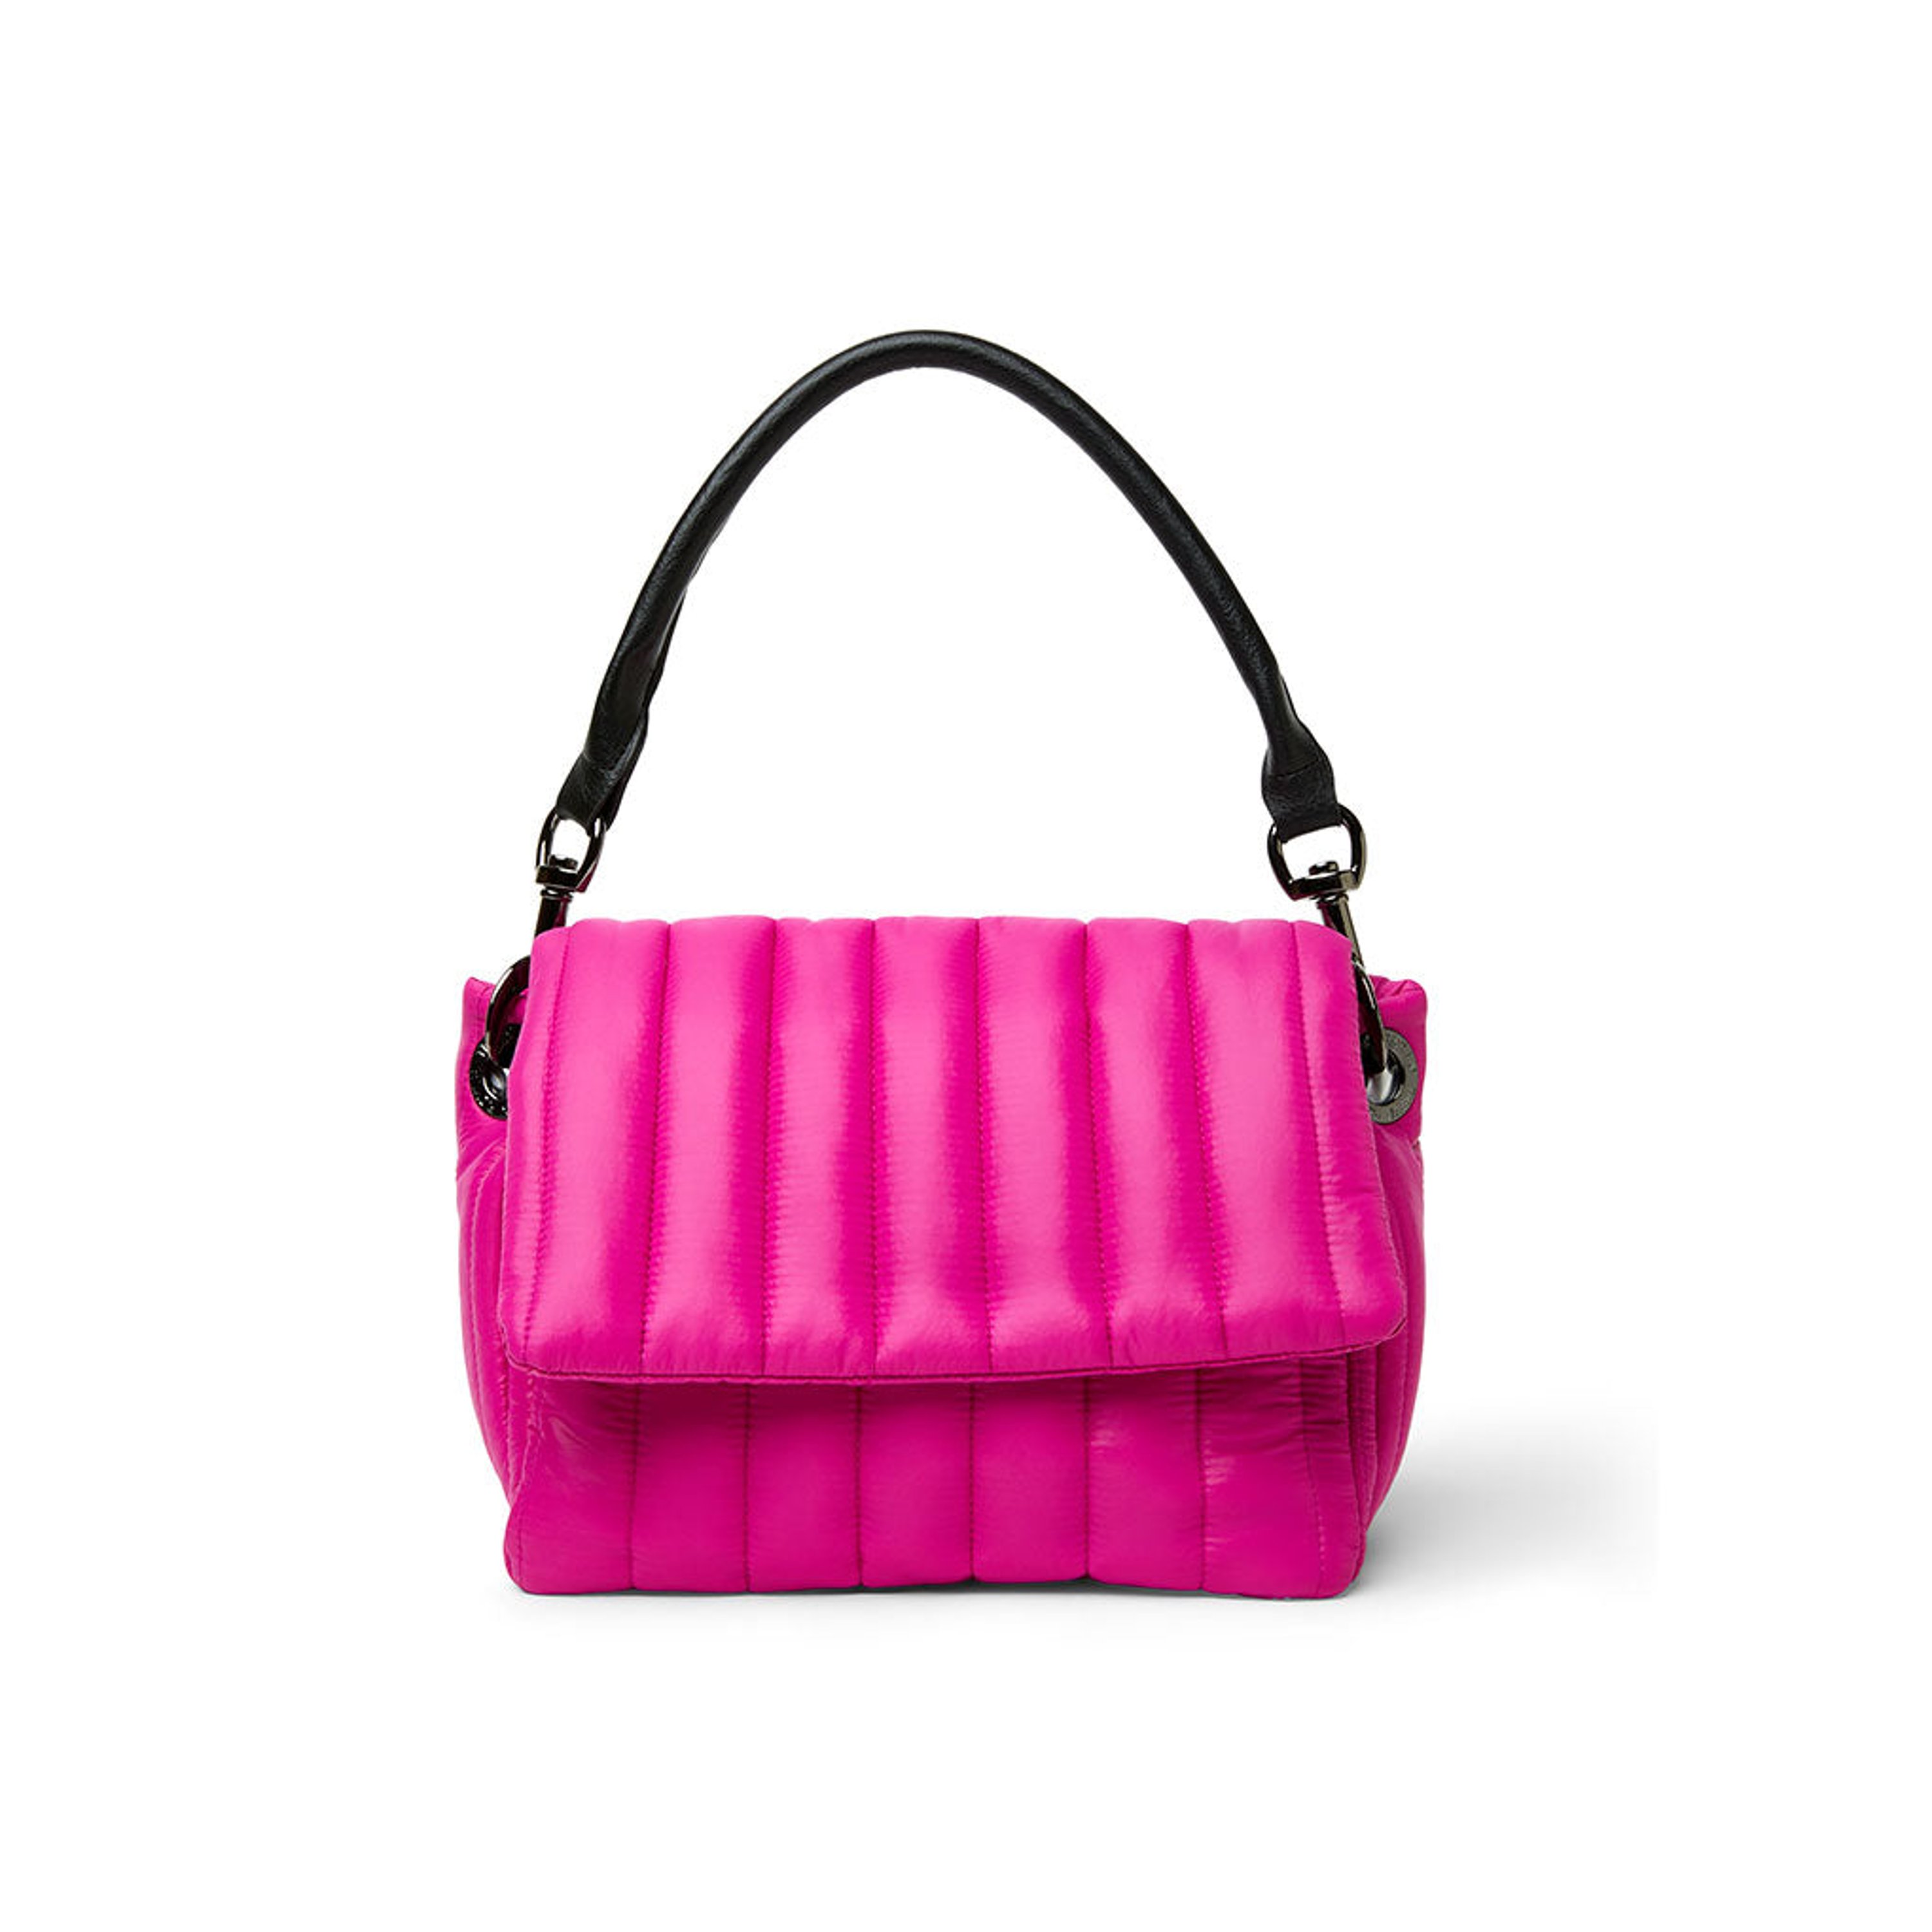 Think Royln Bar Bag In Pink | ModeSens